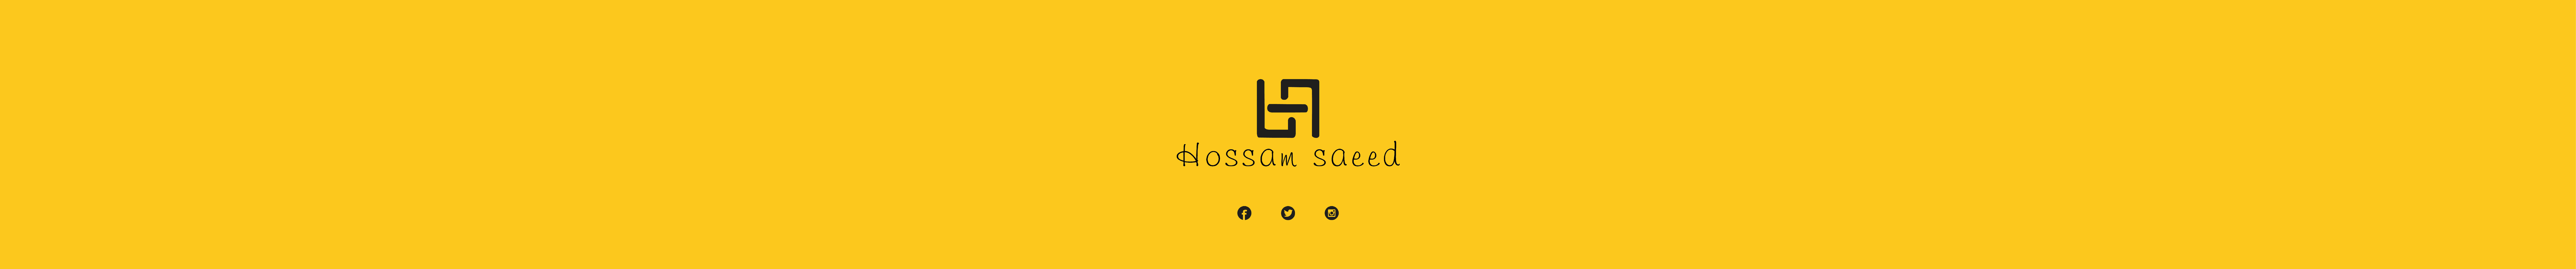 Hossam saeed 的个人资料横幅